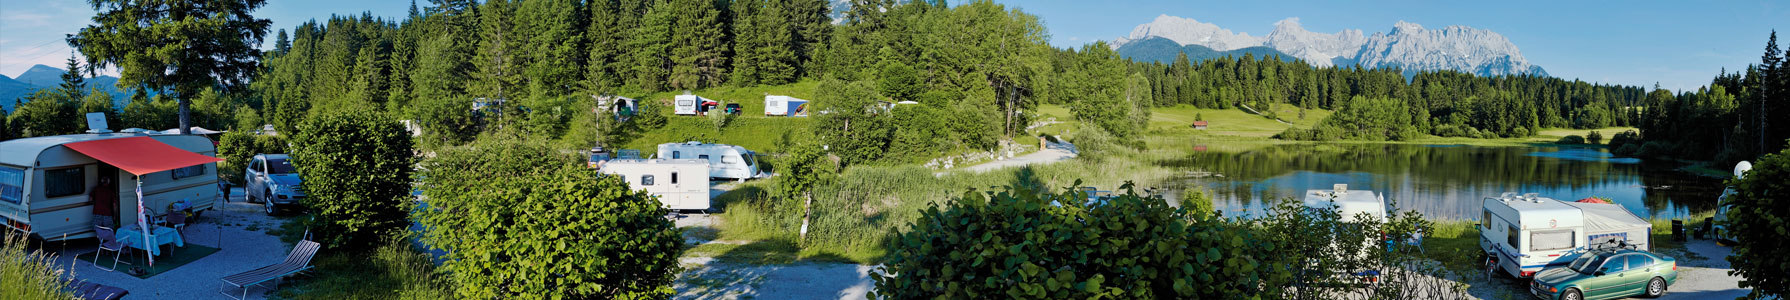 Alpen-Caravanpark Tennsee Preis Platz Bayern